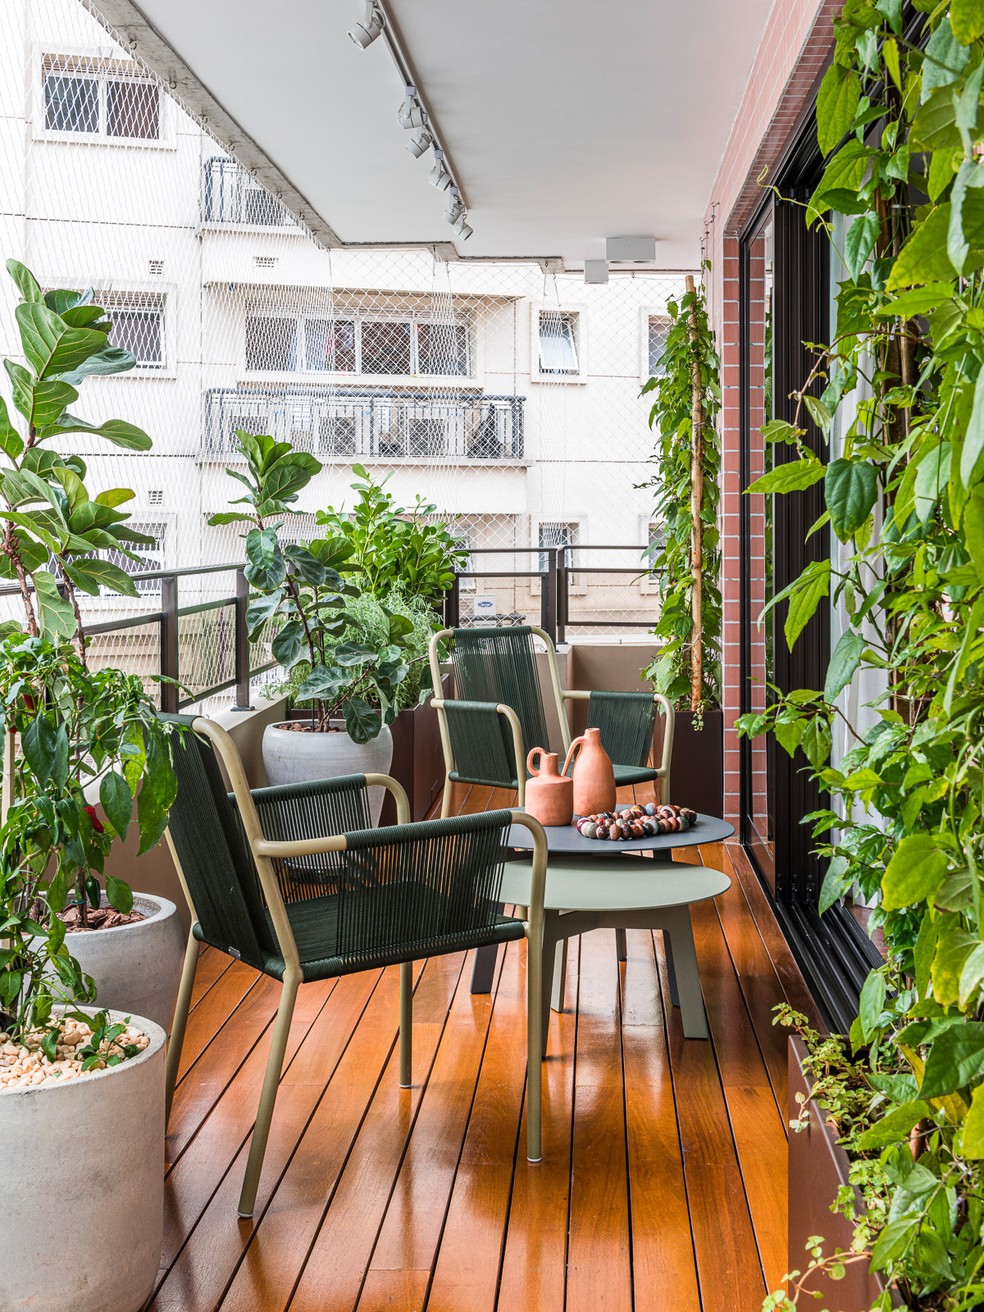 Um extenso jardim vertical emoldura a varanda aberta — Foto: Renato Navarro